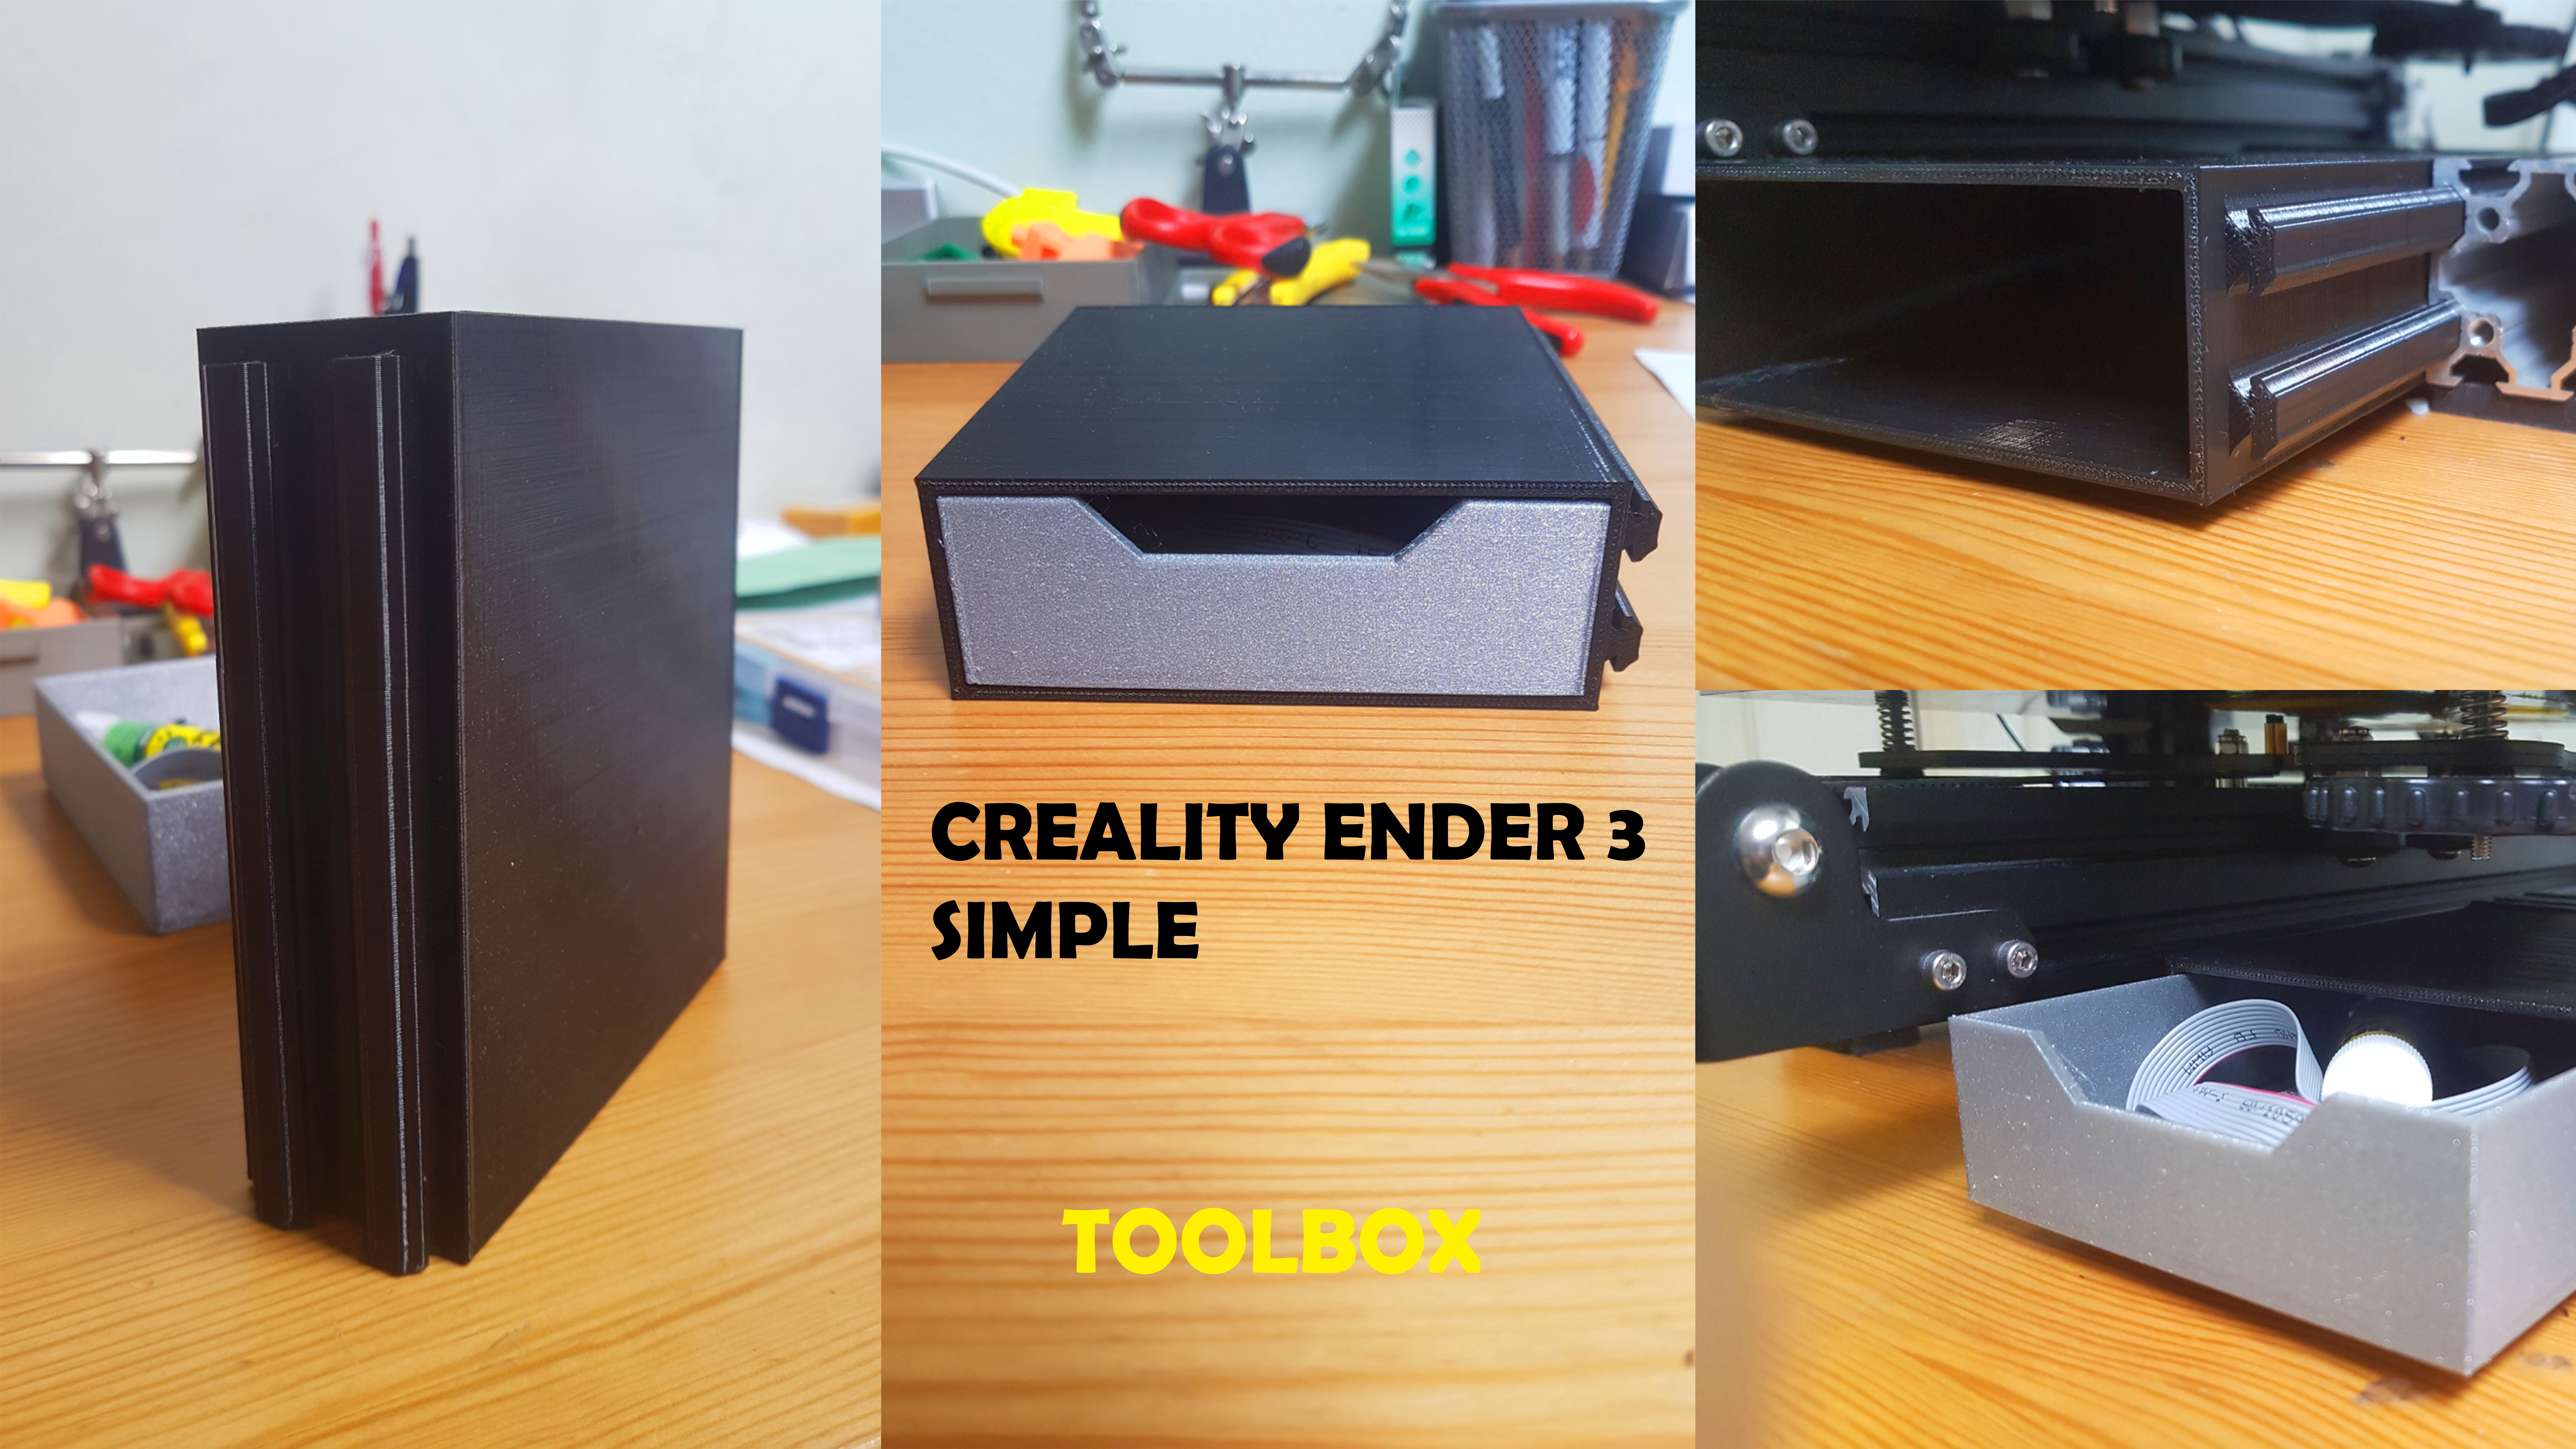 Creality Ender 3 toolbox